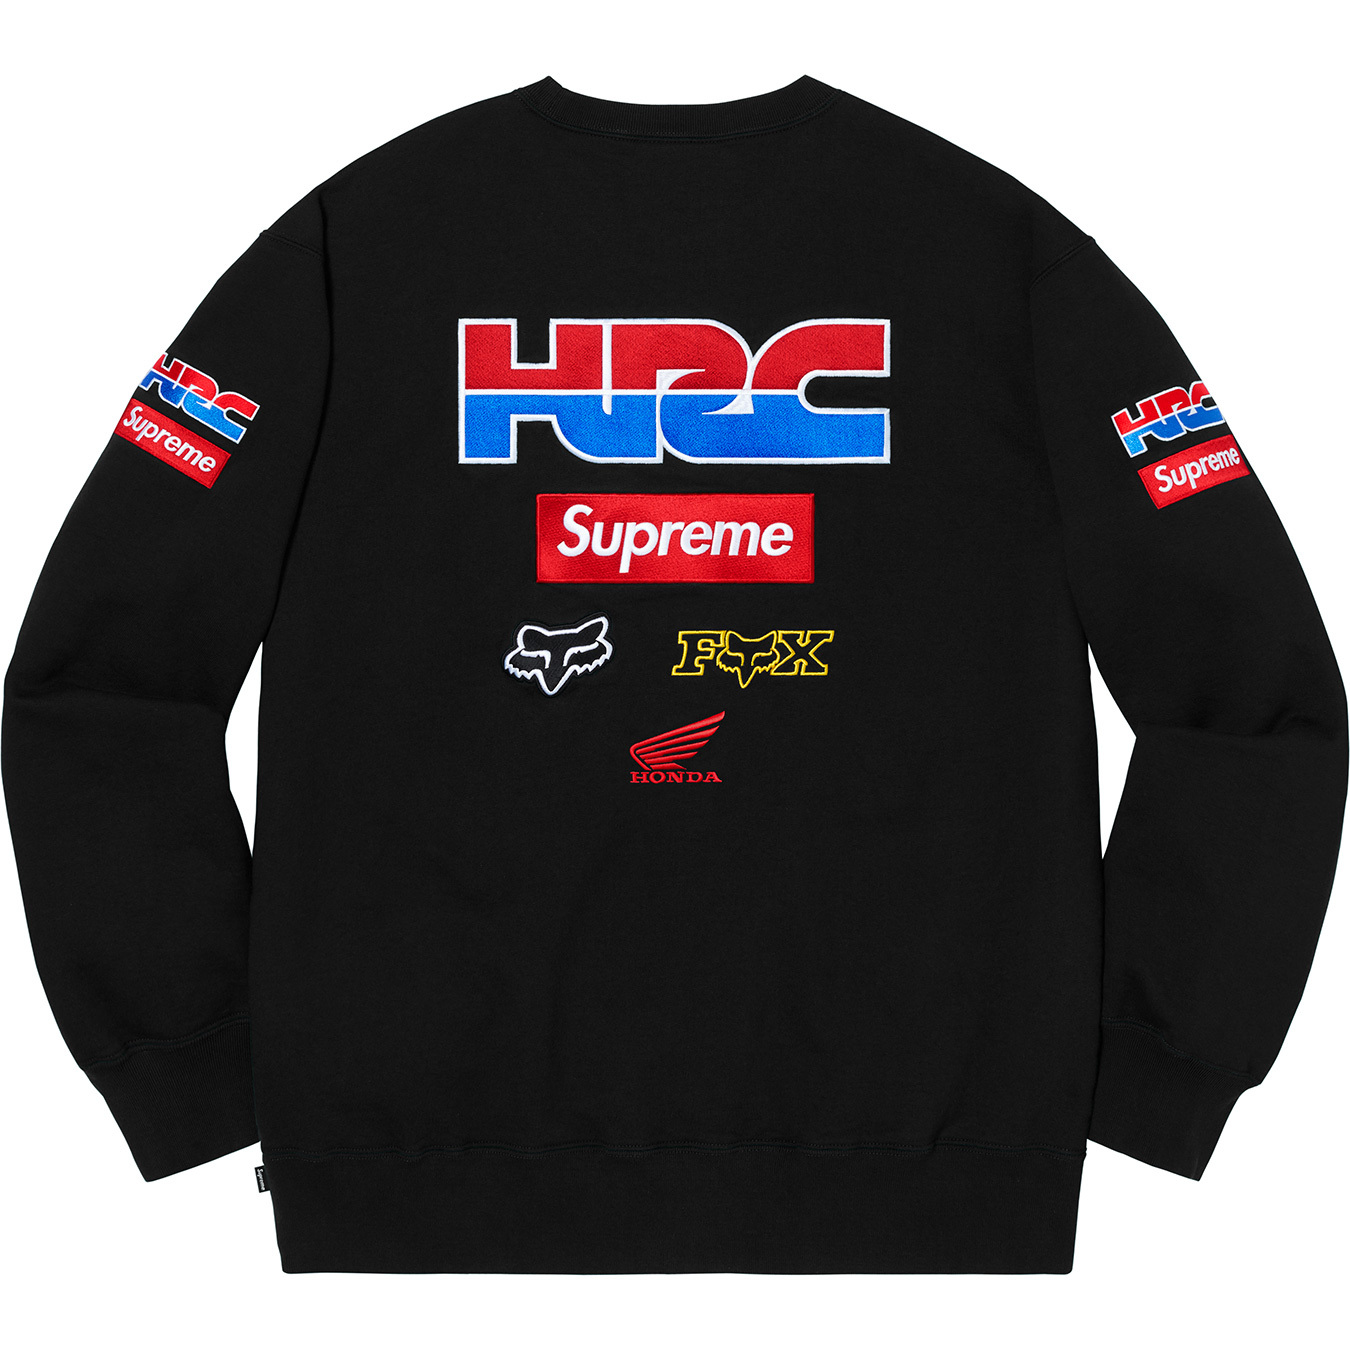 Supreme®/Honda®/Fox® Racing Crewneck